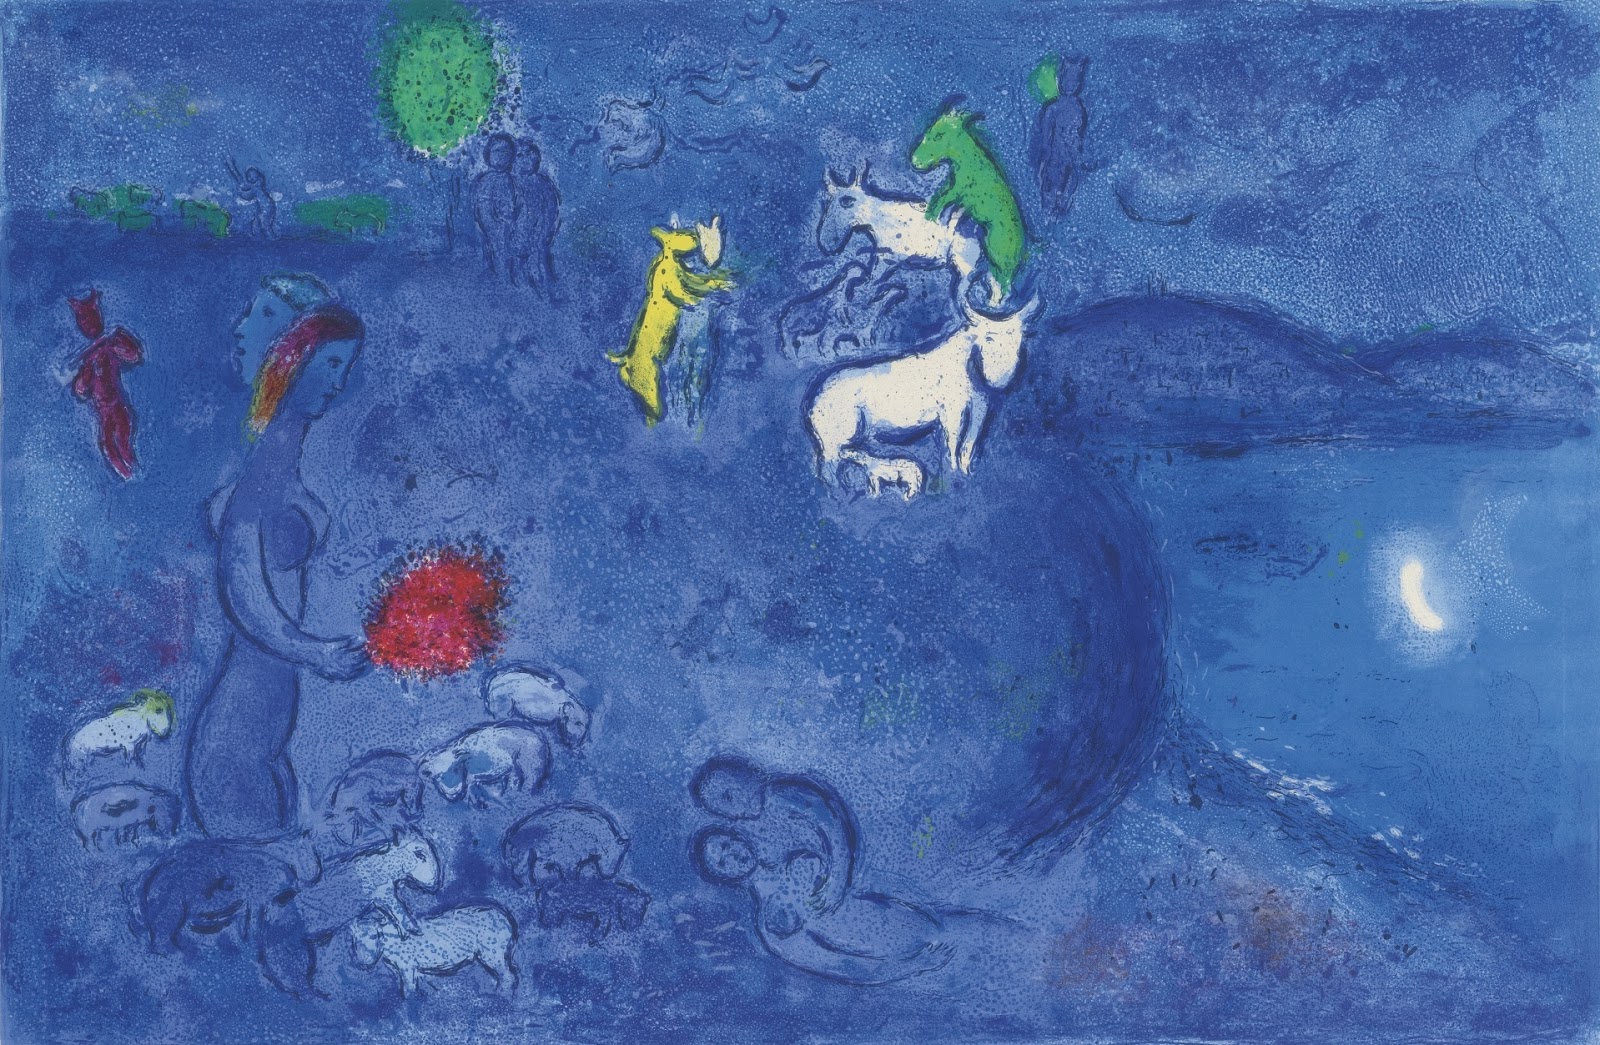 Marc+Chagall-1887-1985 (394).jpg